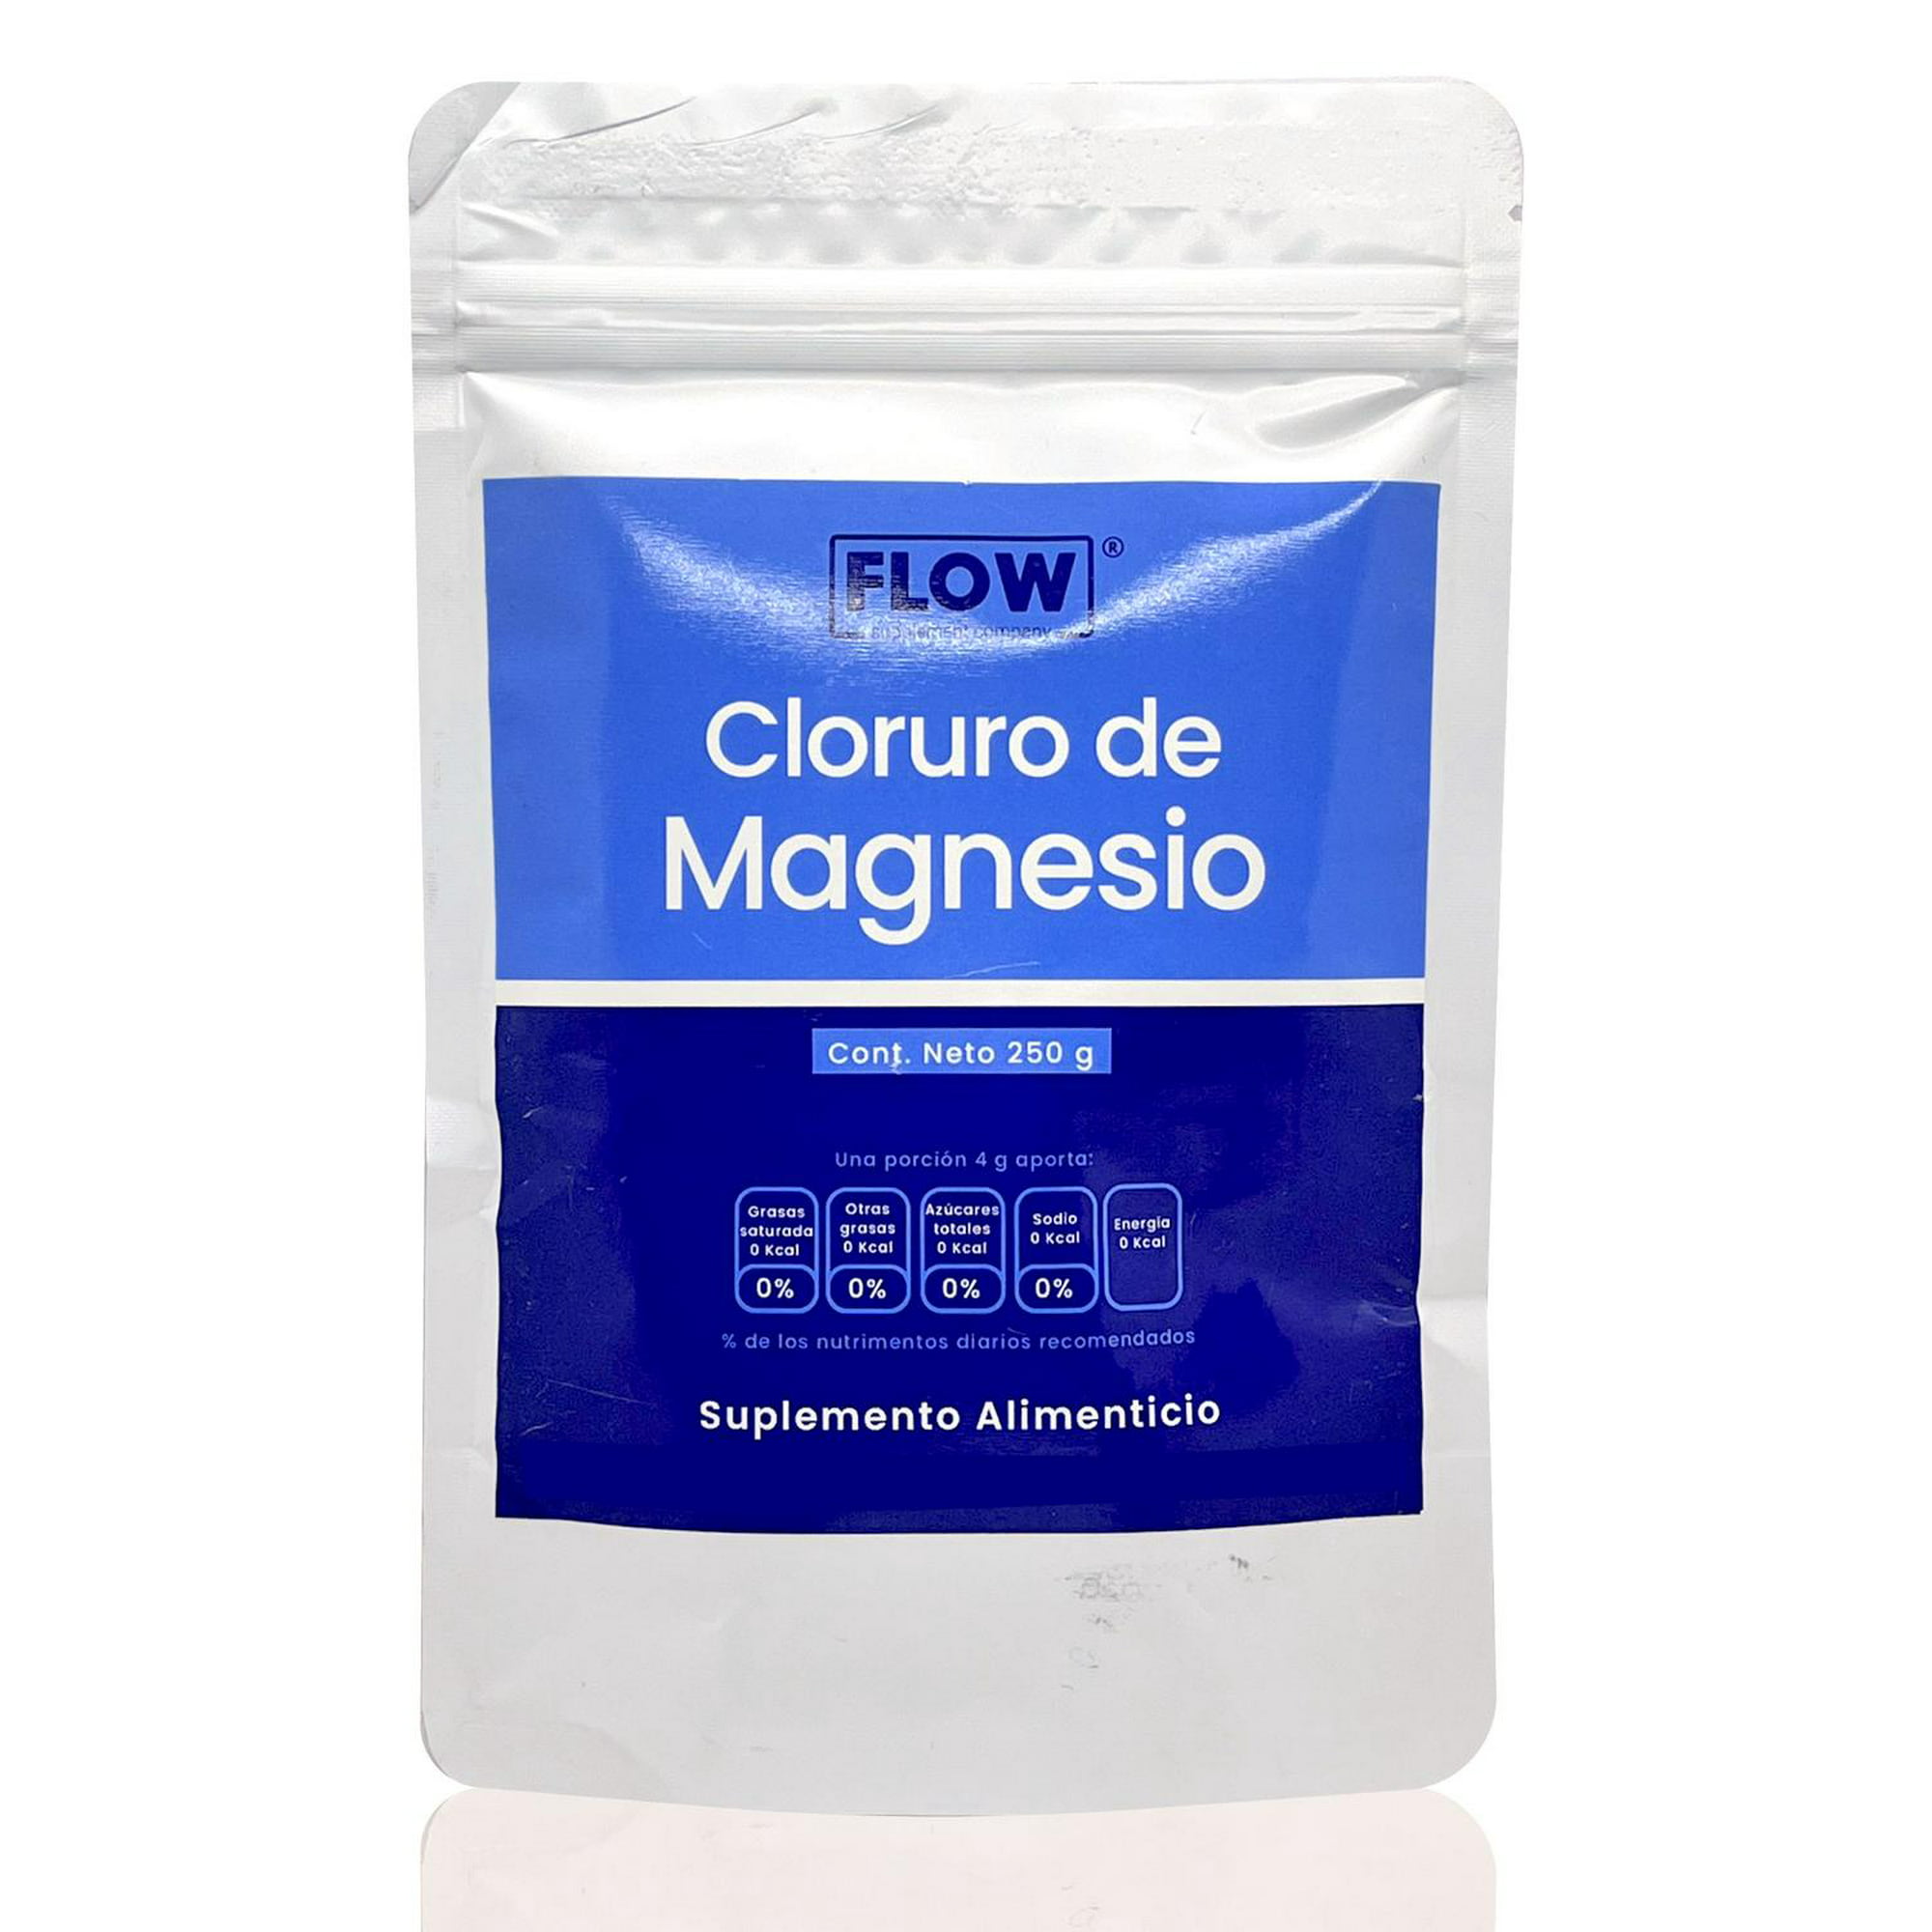 Cloruro de Magnesio en polvo 250 grs Flow FLOW FLOWCLORUROMAGNESIO |  Walmart en línea